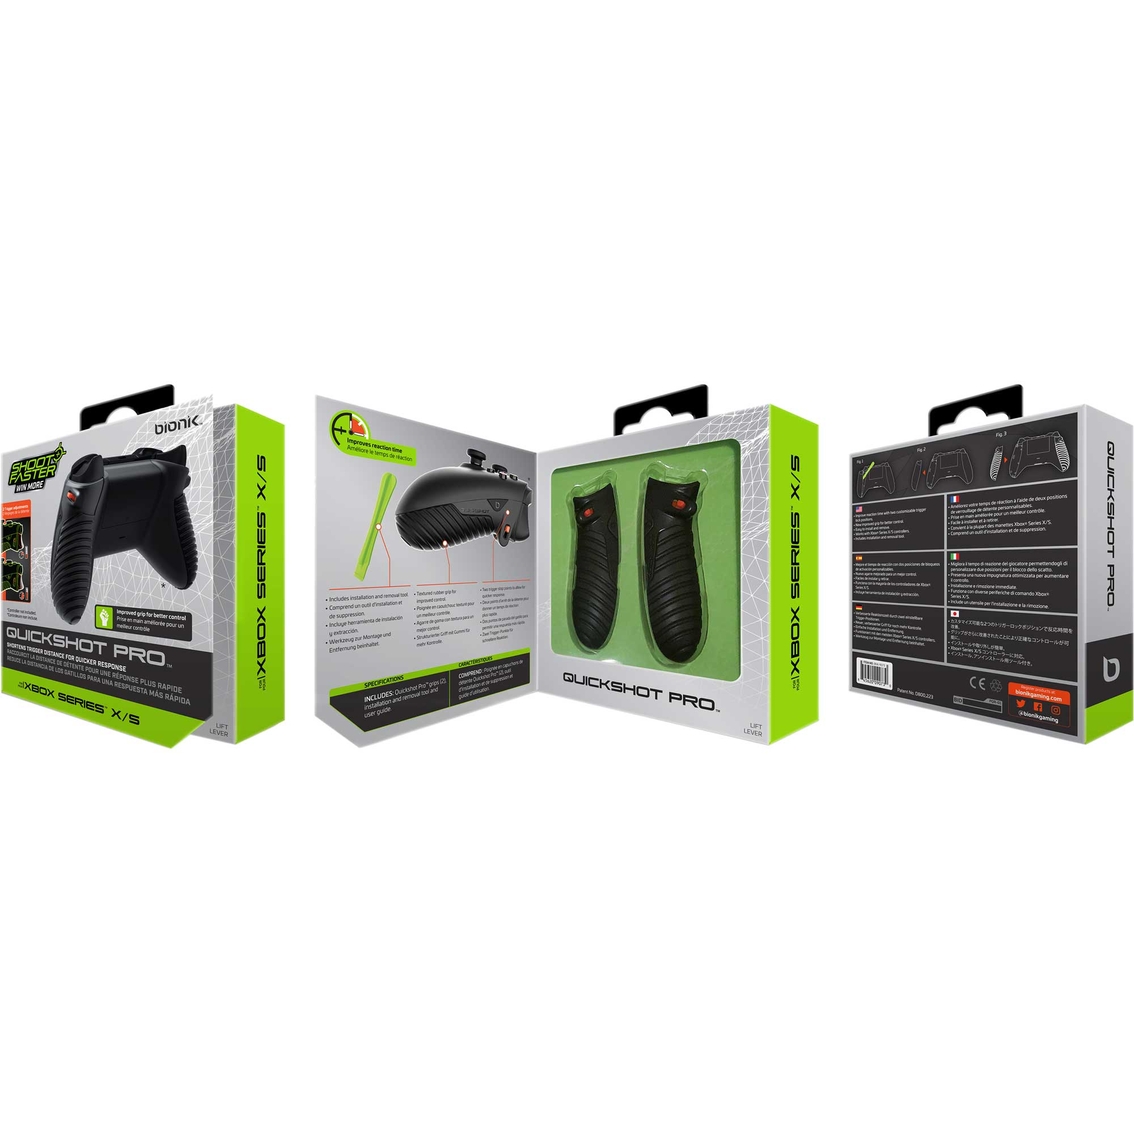 bionik Quickshot Pro for Xbox Series S/X - Image 7 of 7